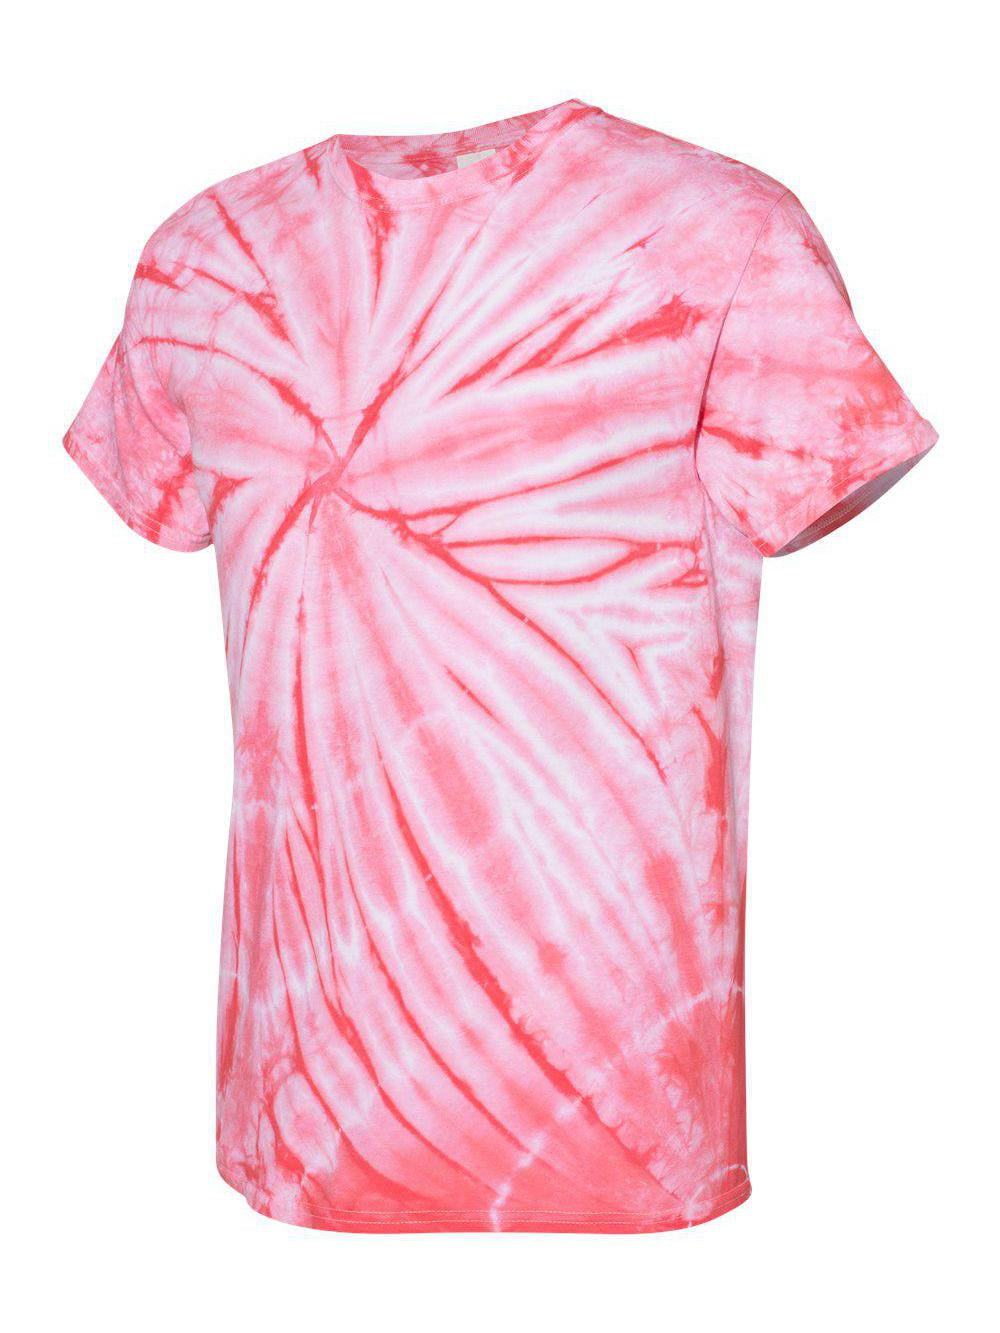 Dyenomite - Cyclone Pinwheel Tie-Dyed T-Shirt - 200CY - Walmart.com